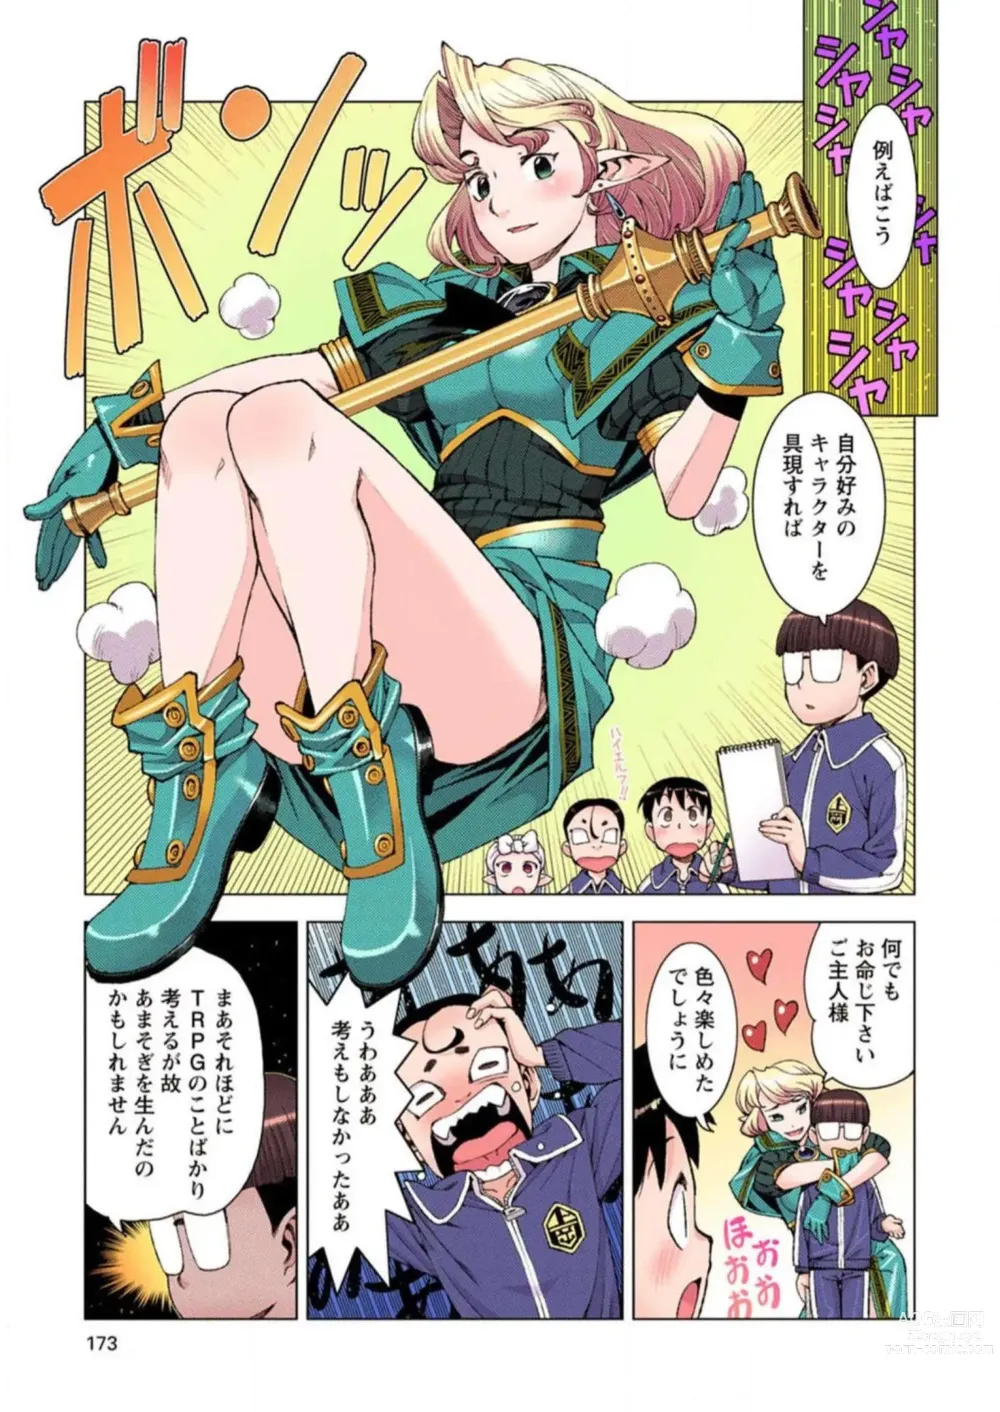 Page 173 of manga Tsugumomo Digital Colored Comics V2